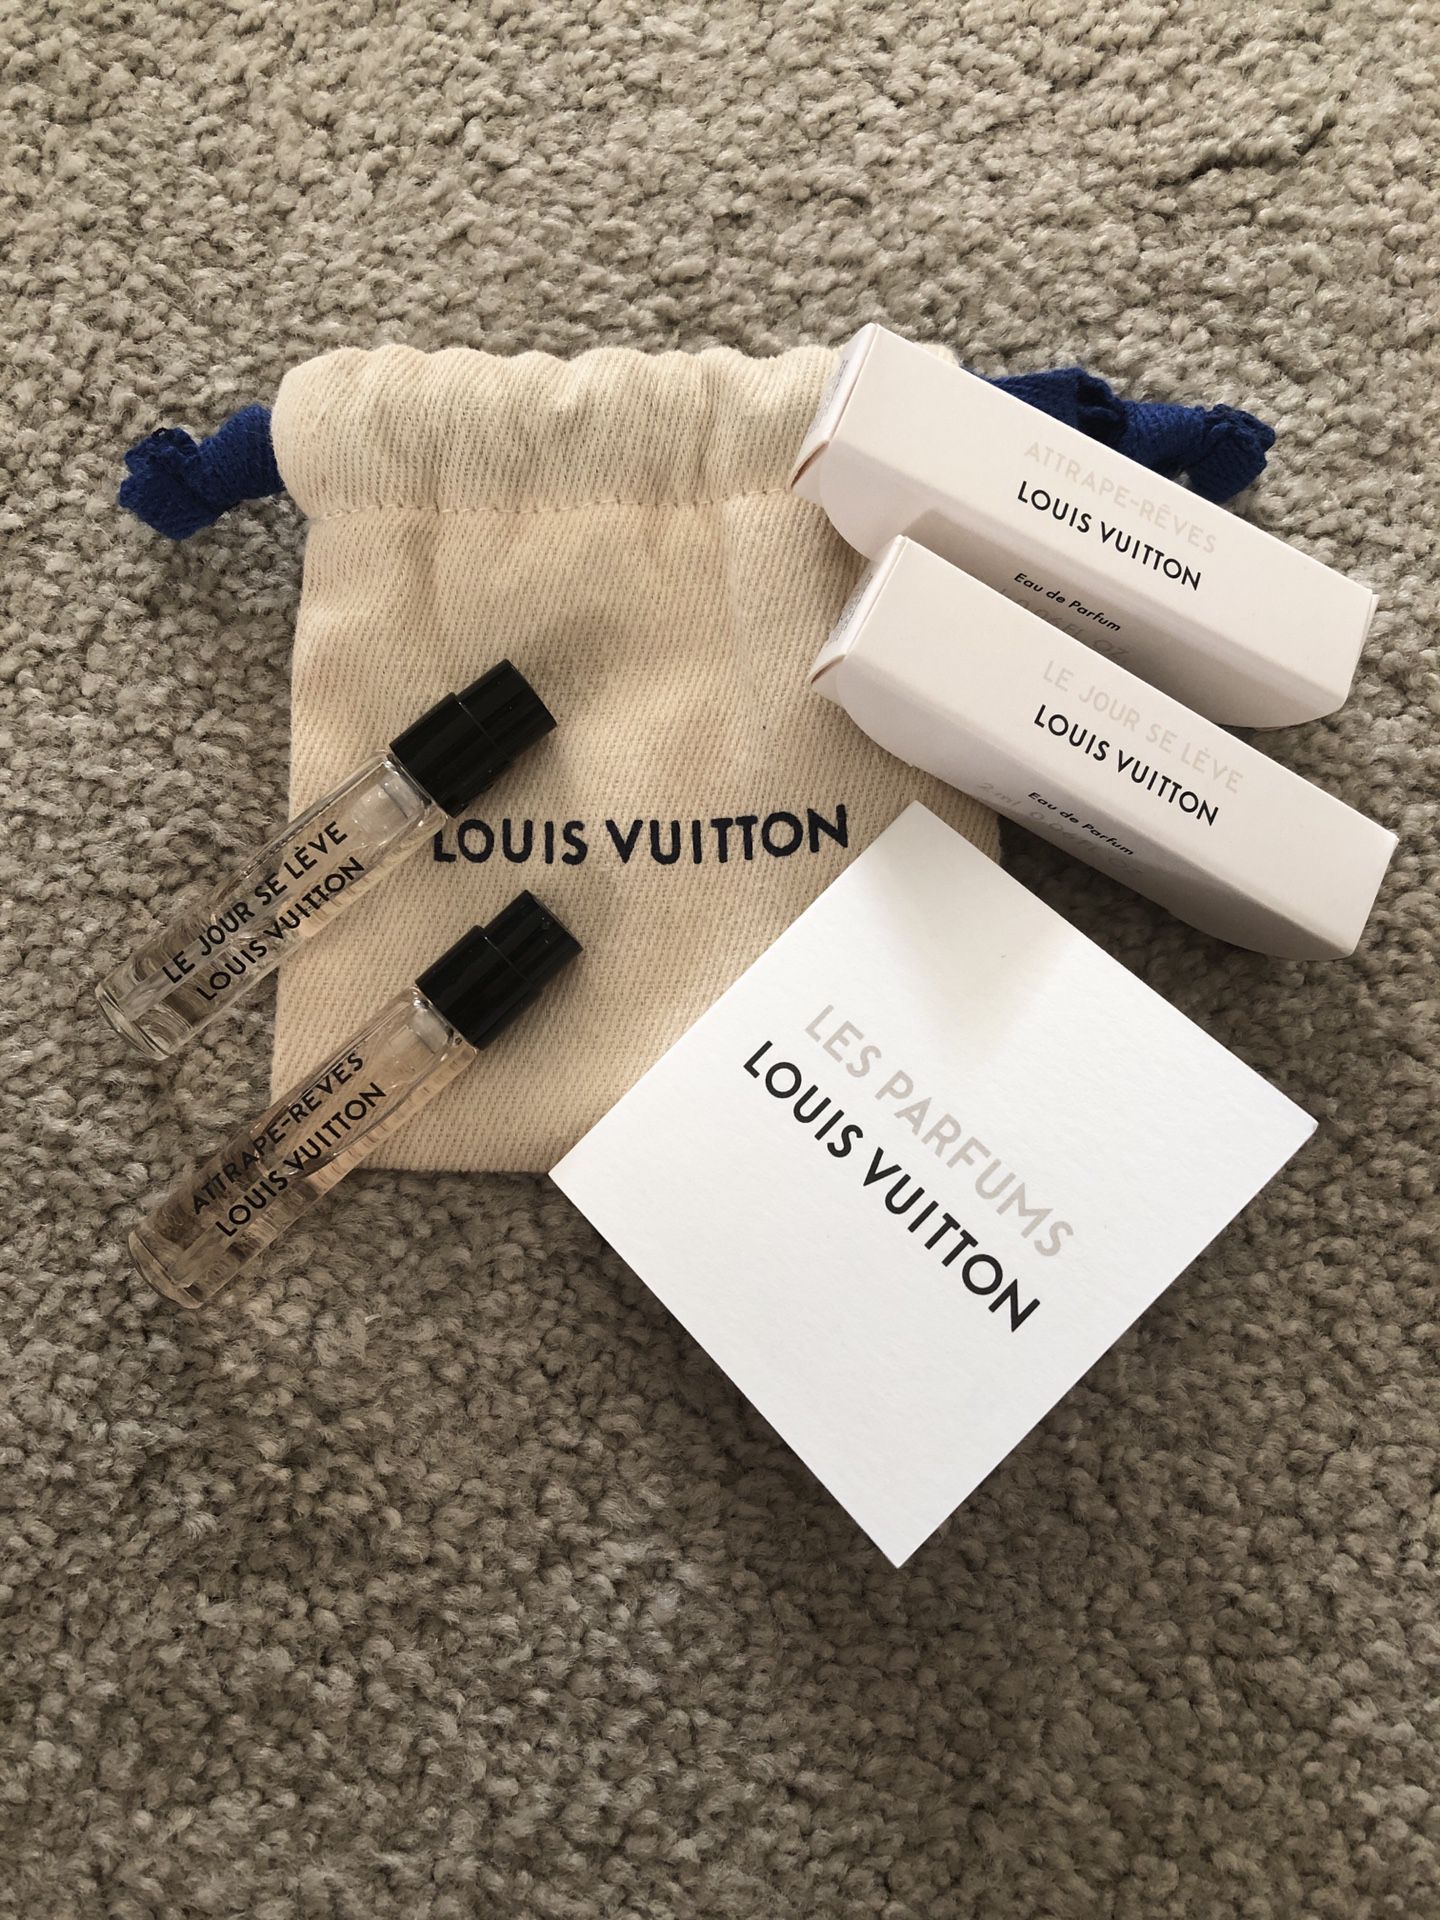 Louis Vuitton Perfume Samples